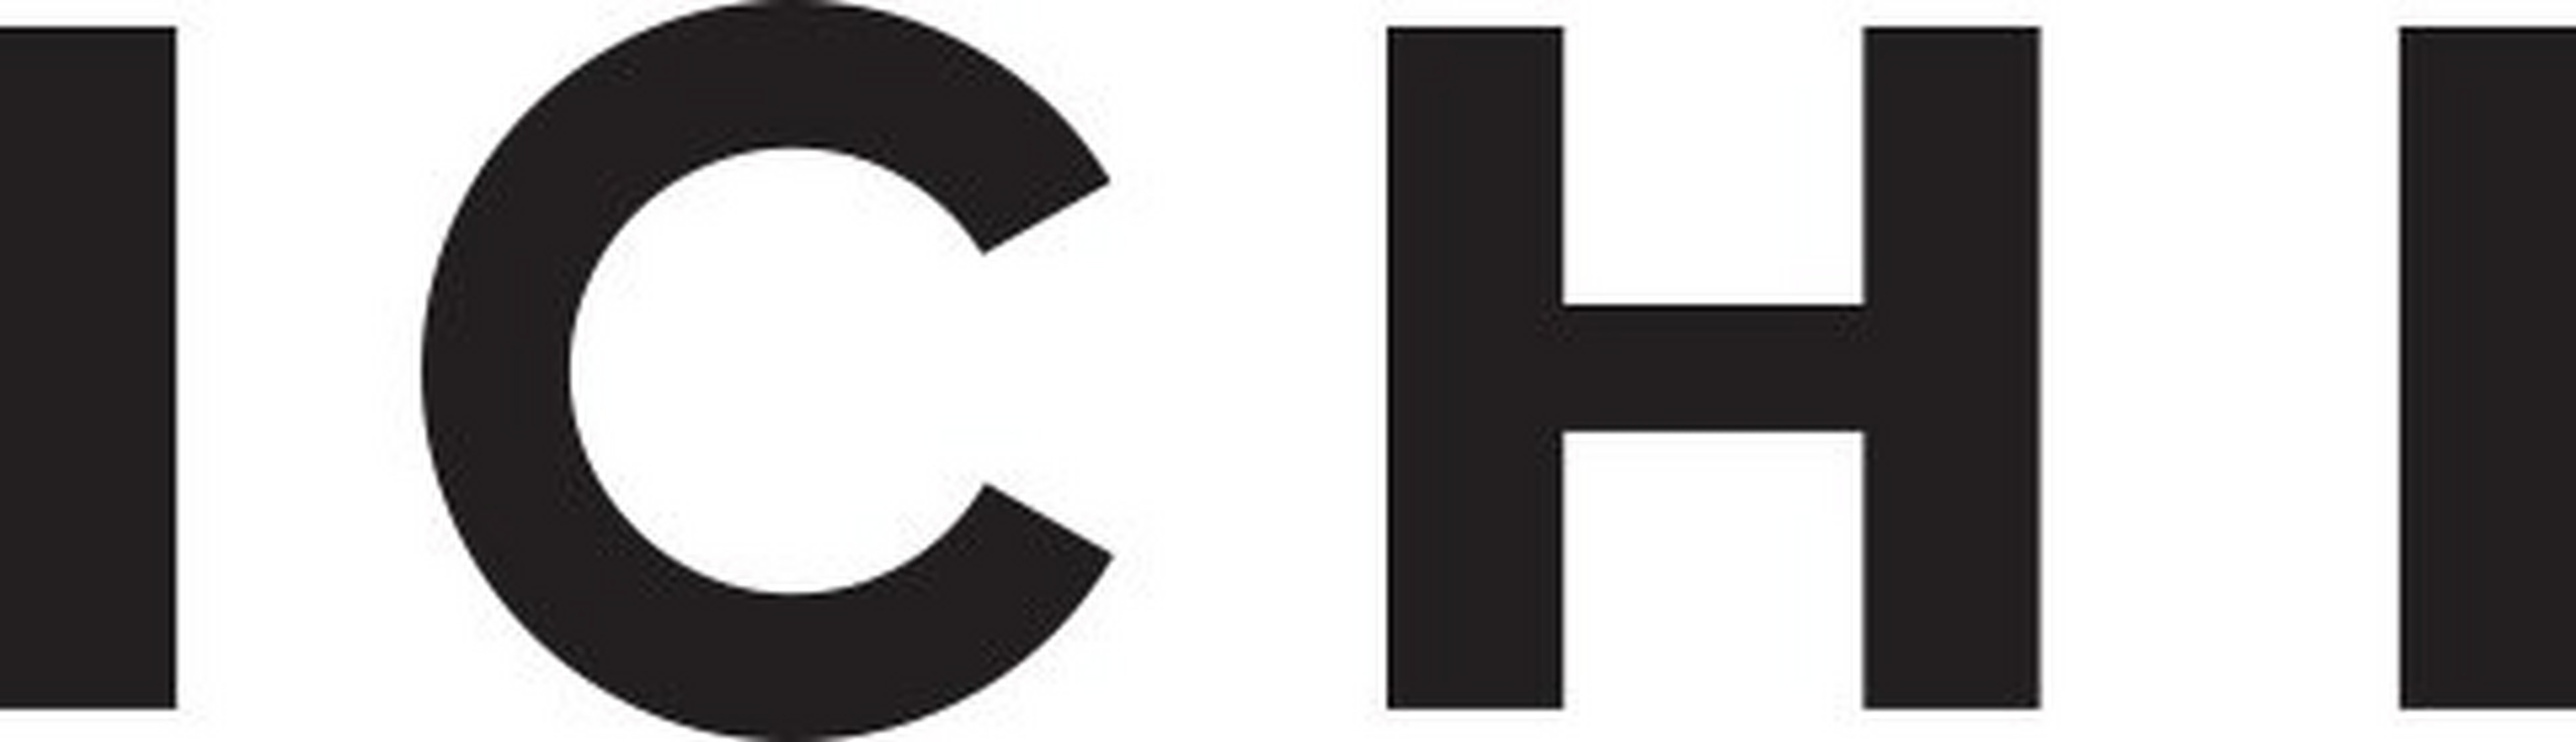 ICHI logotype